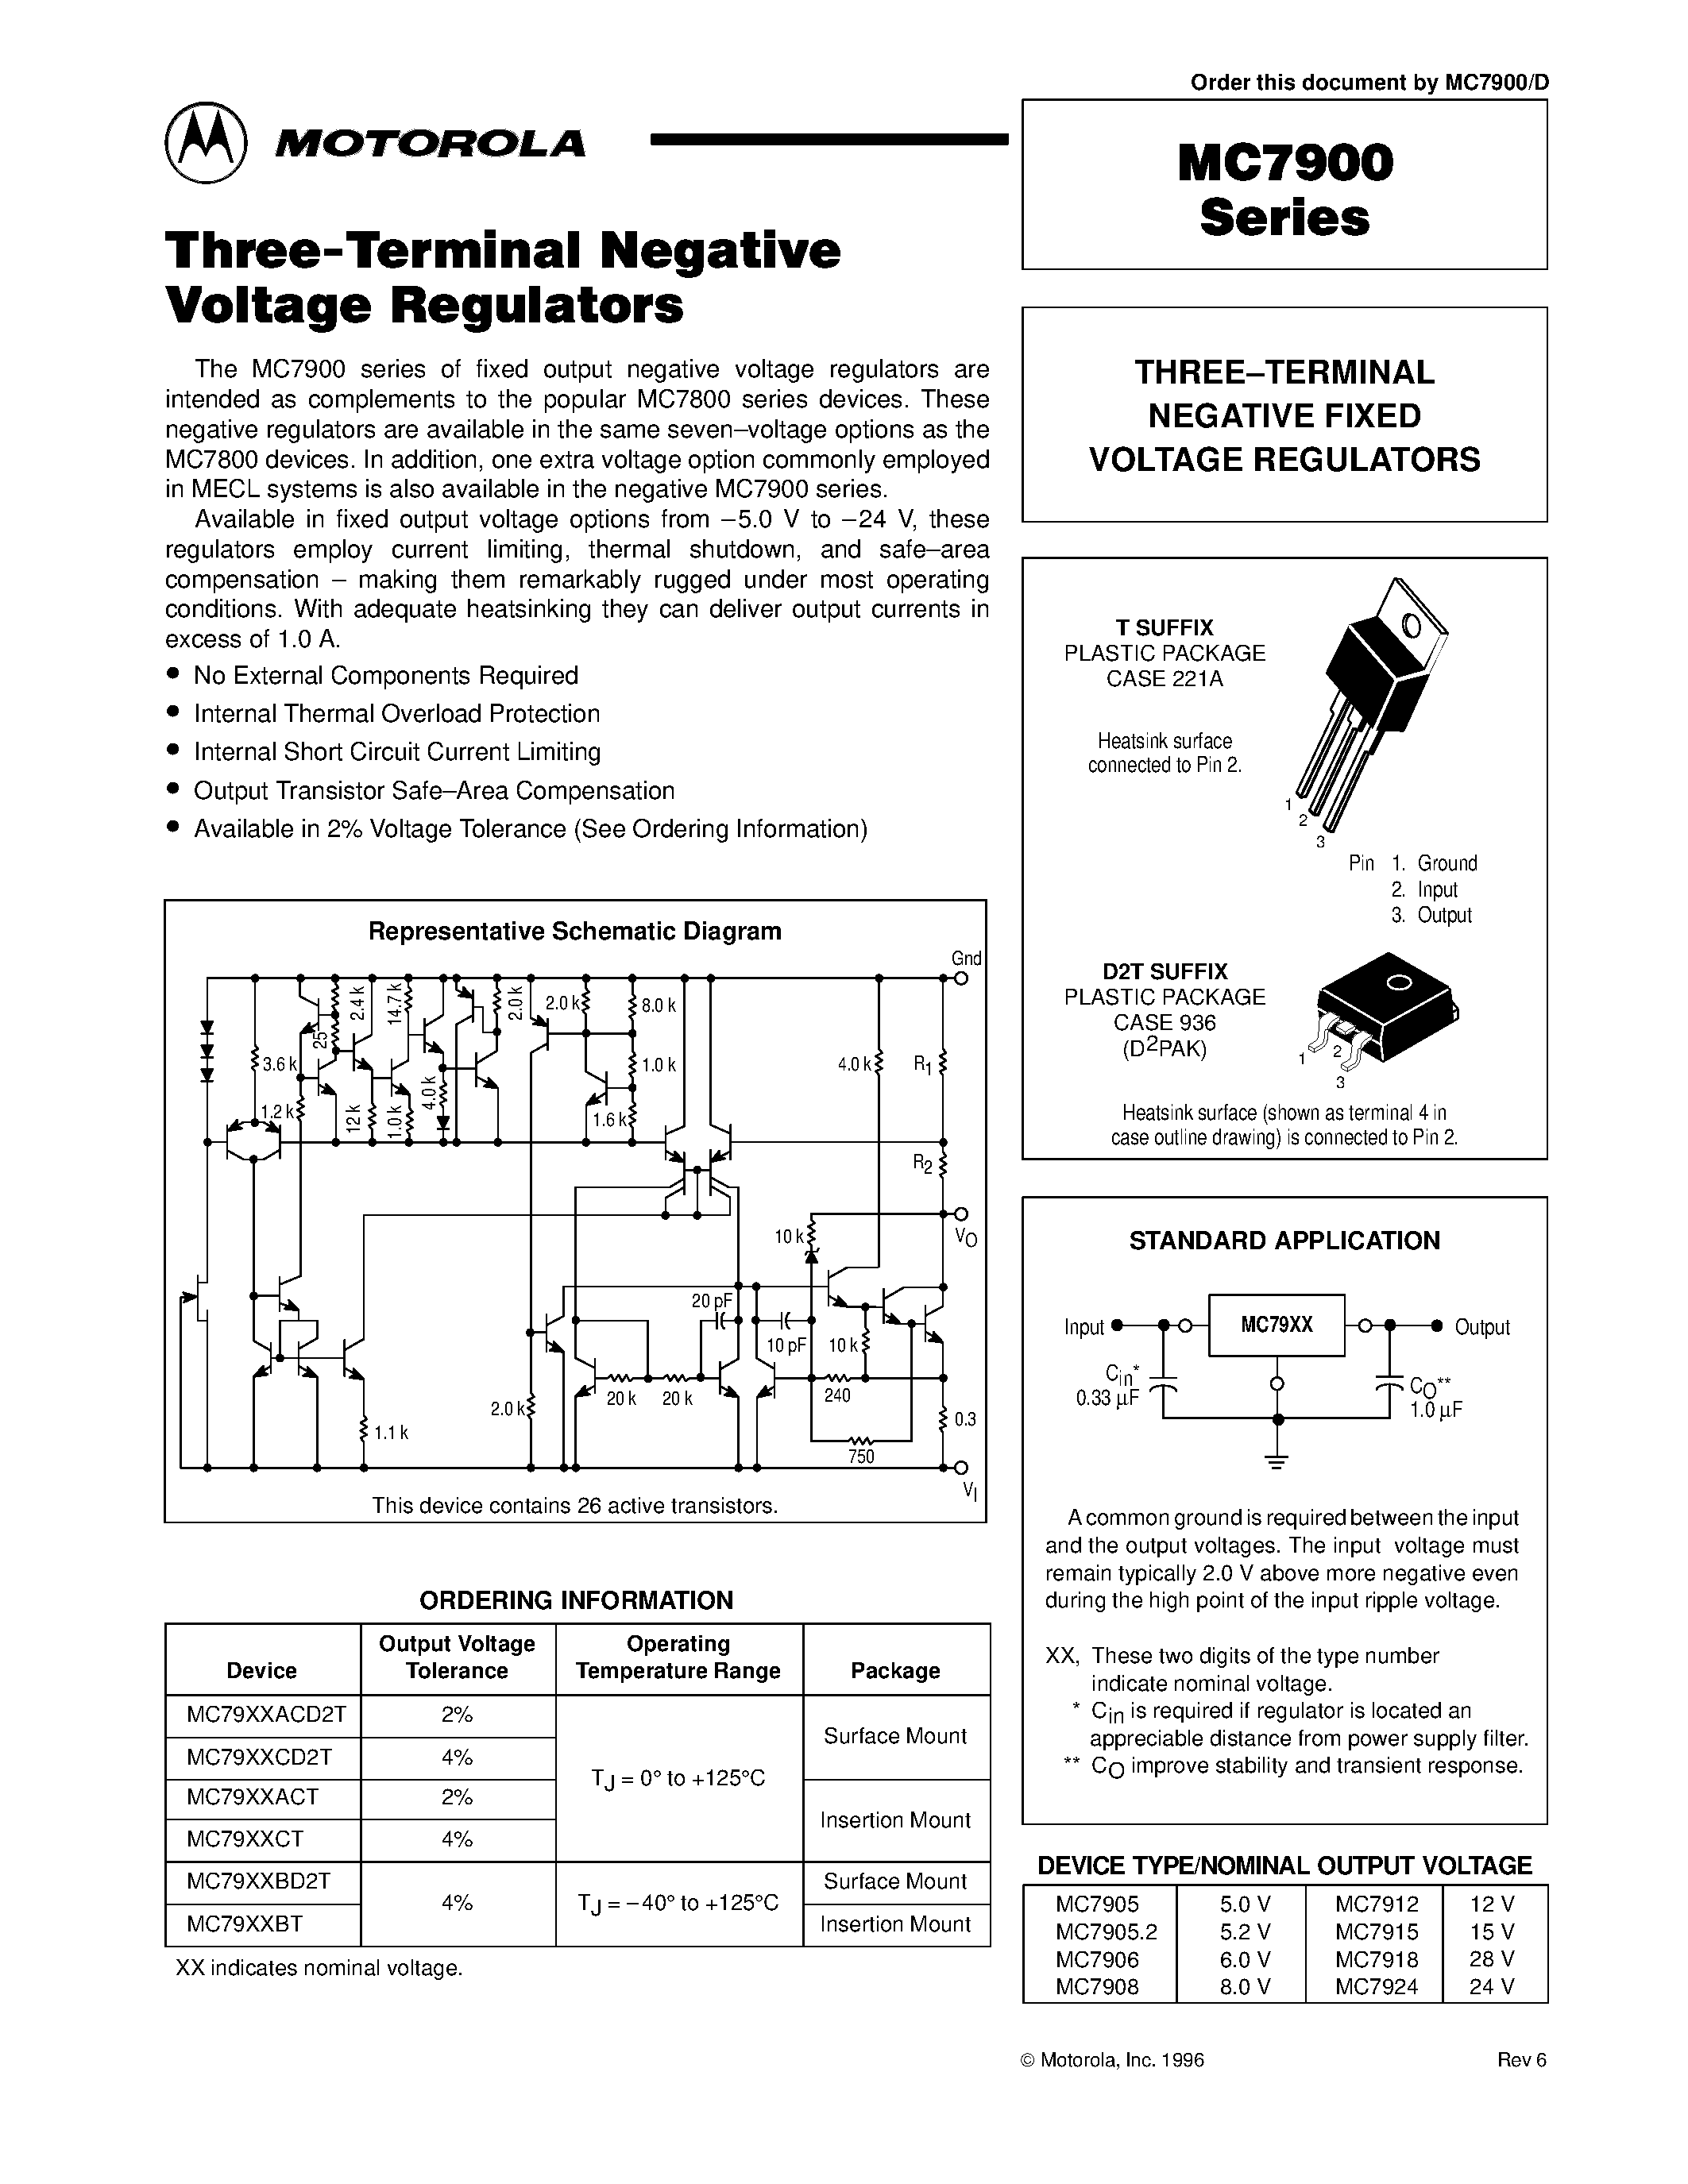 Datasheet MC7905ACD2T - THREE-TERMINAL NEGATIVE FIXED VOLTAGE REGULATORS page 1